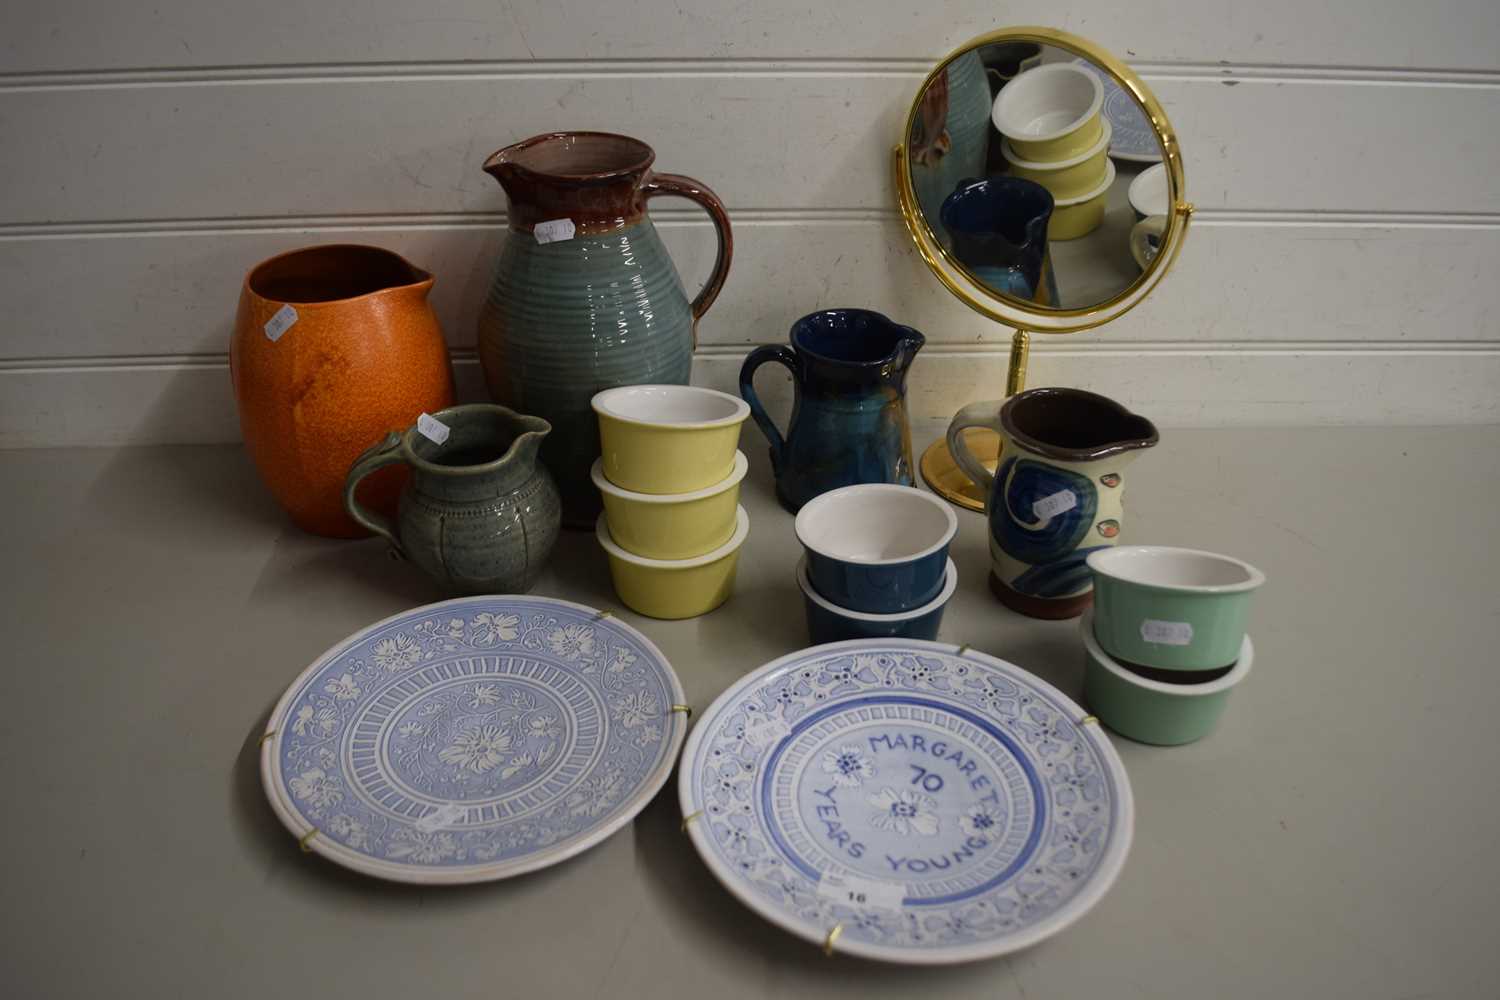 Mixed Lot: Terrington Pottery plates, various jugs, shaving mirror etc